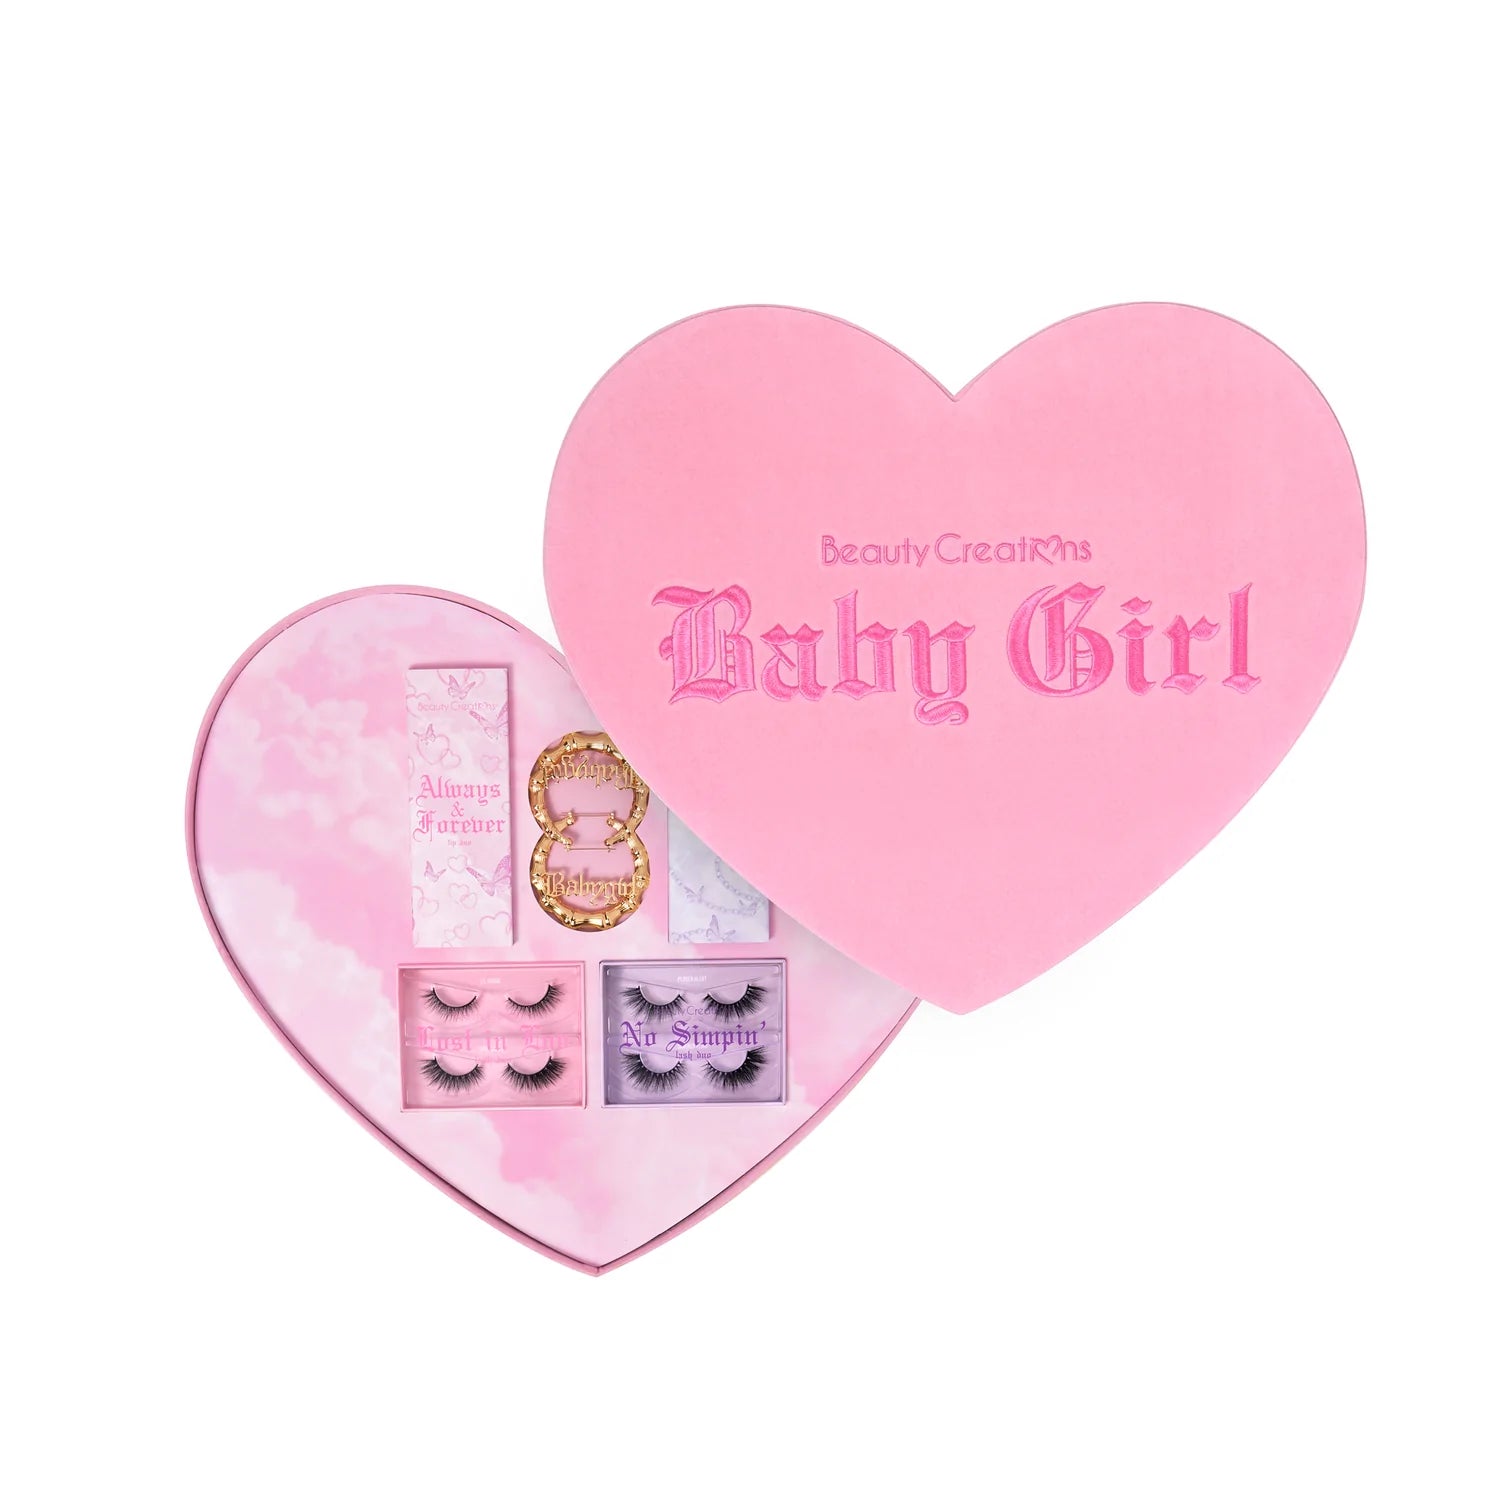 Beauty Creations - Baby Girl PR Set